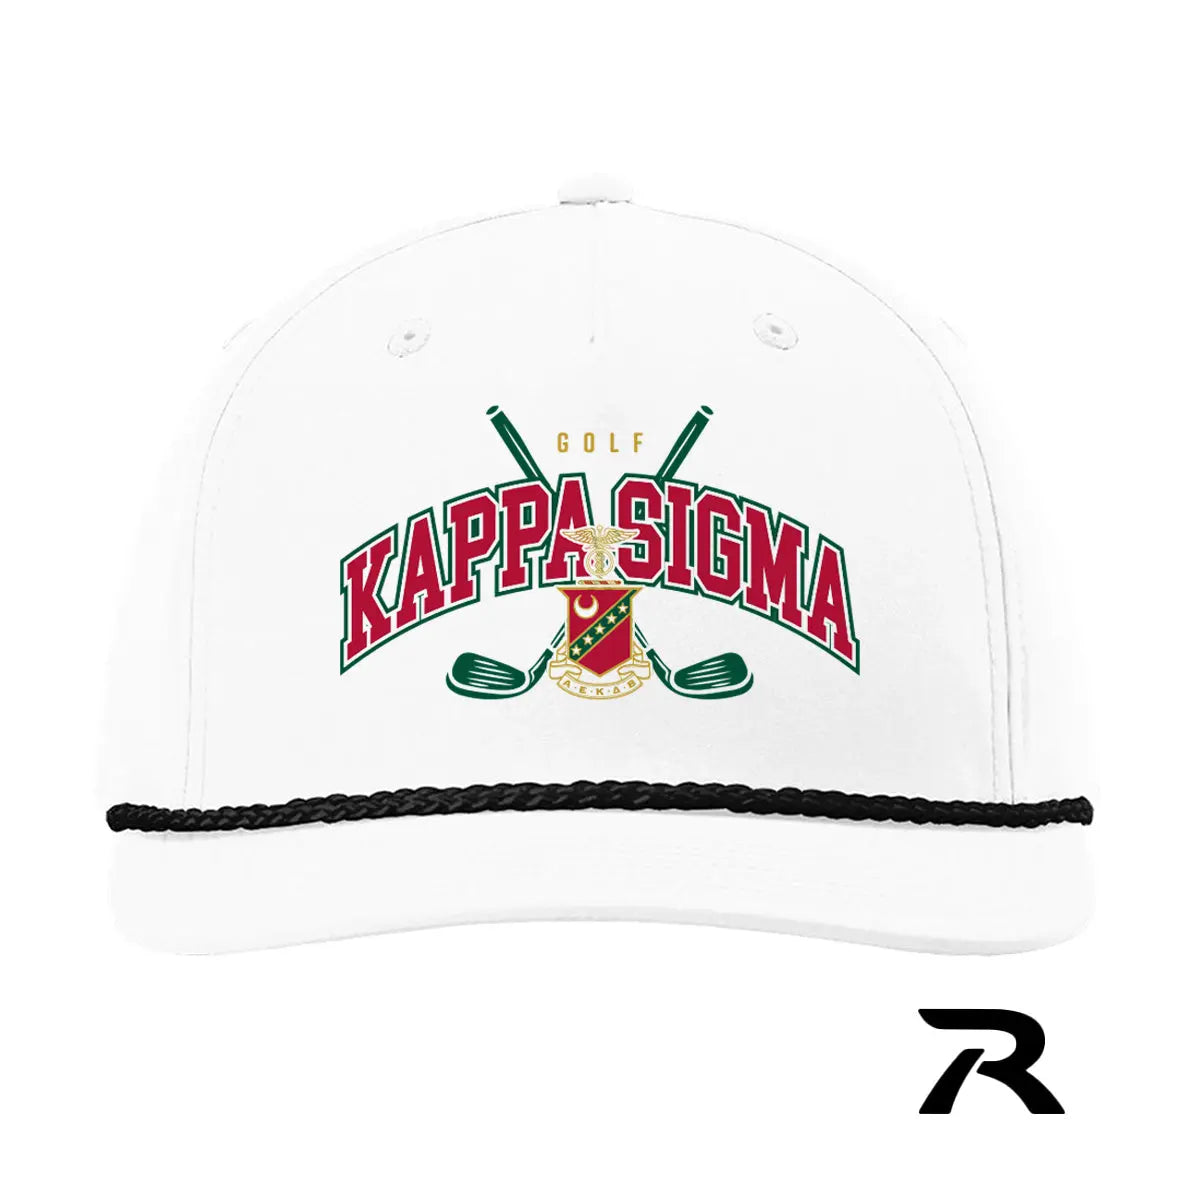 New! Kappa Sig Richardson Caddy Life Rope Hat